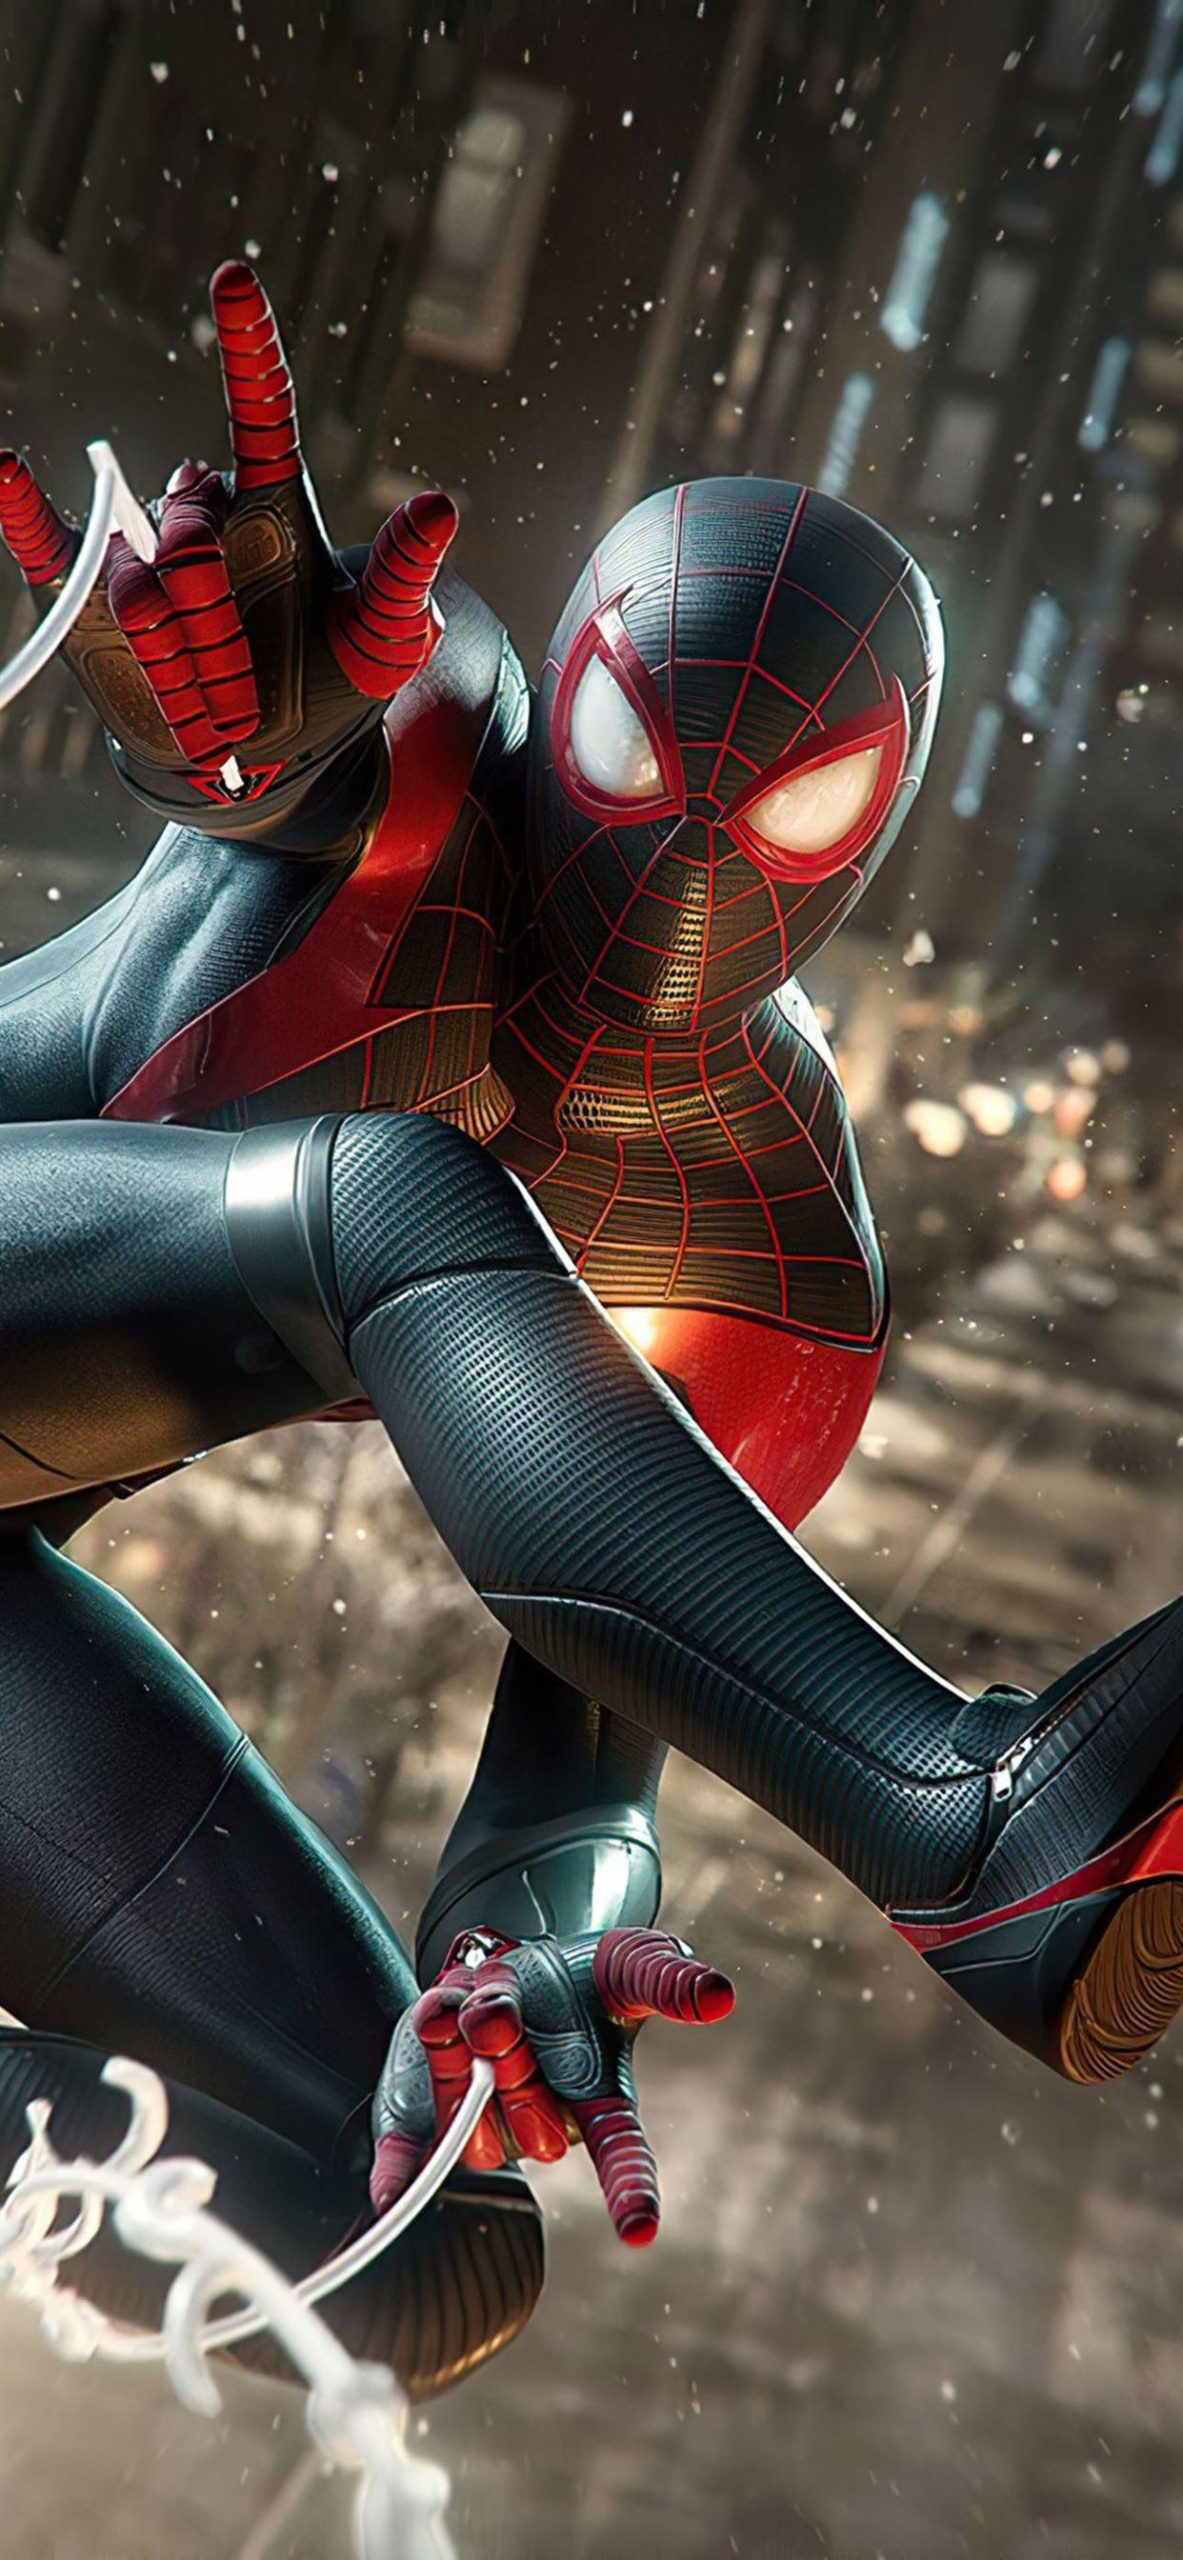 Spider Man Miles Morales 4k iPhone Best Wallpaper Hd